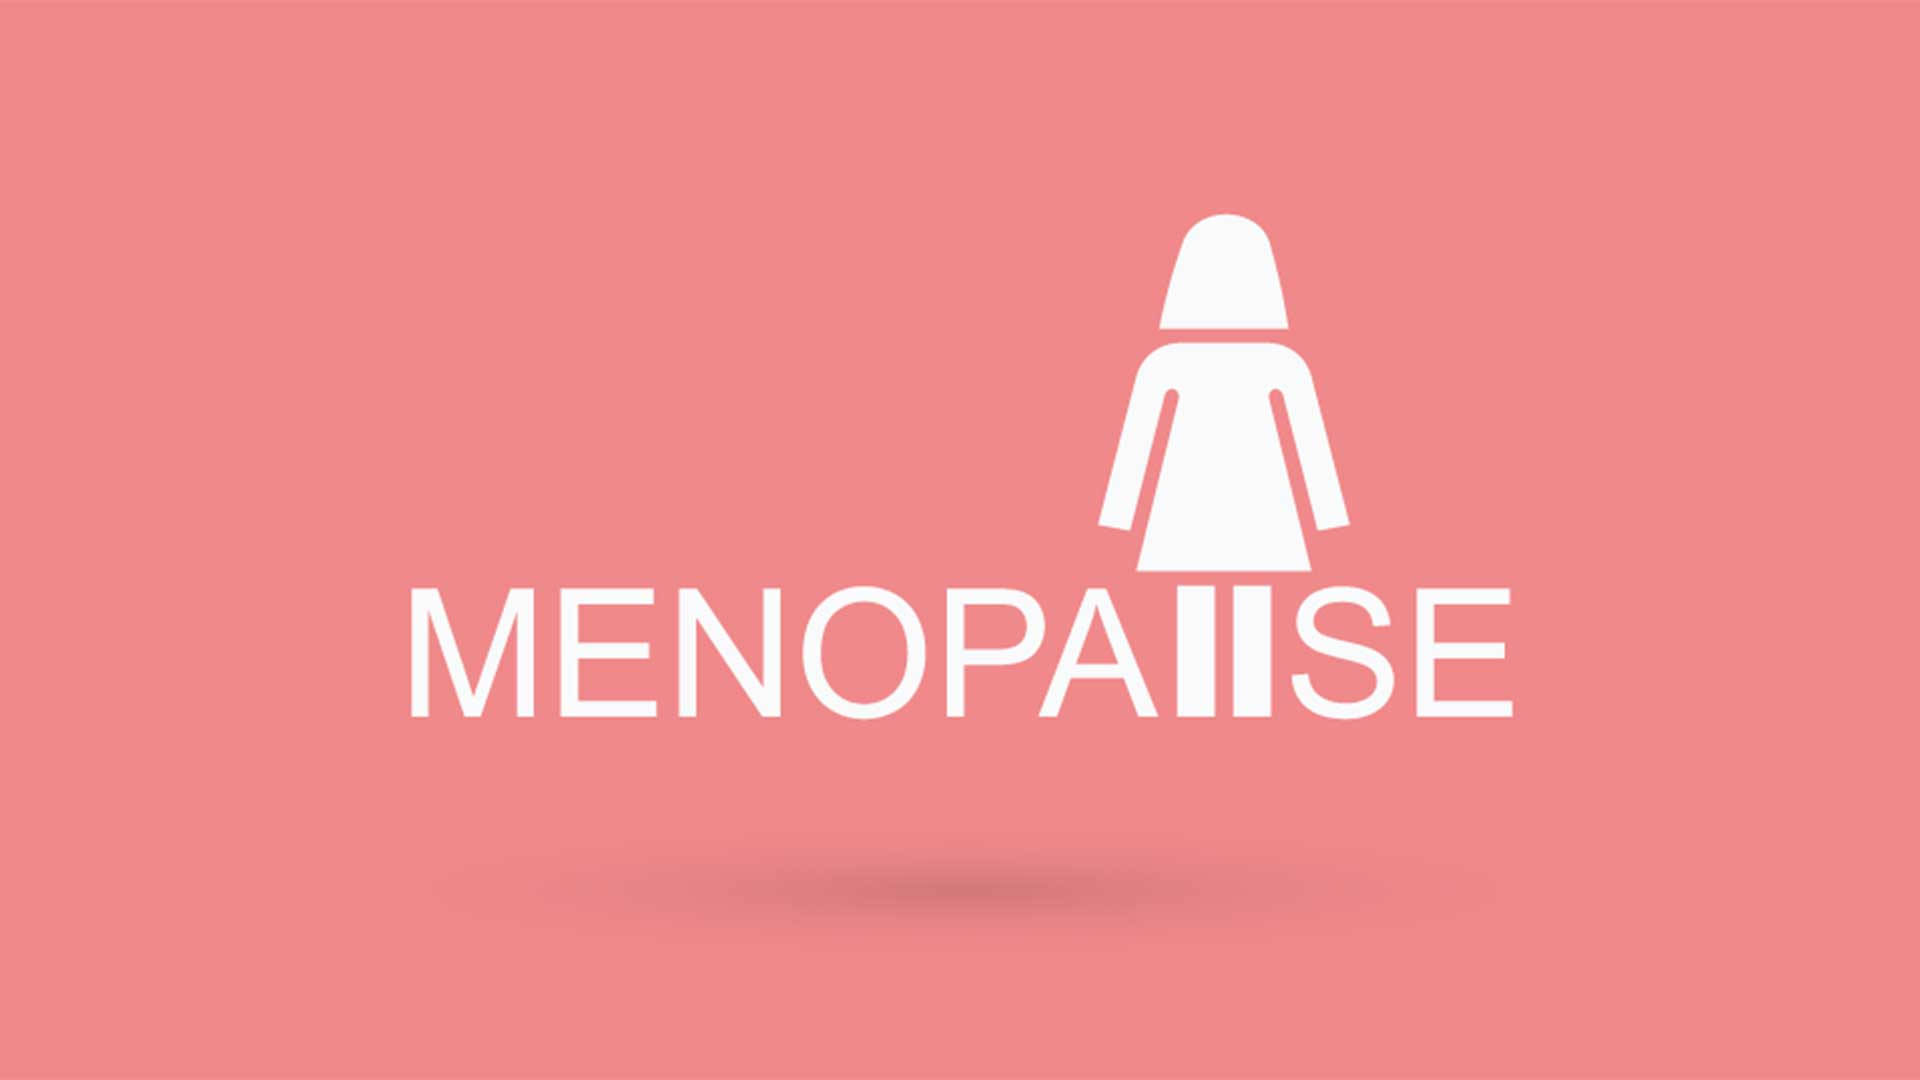 Artevetorial Da Menopausa. Papel de Parede